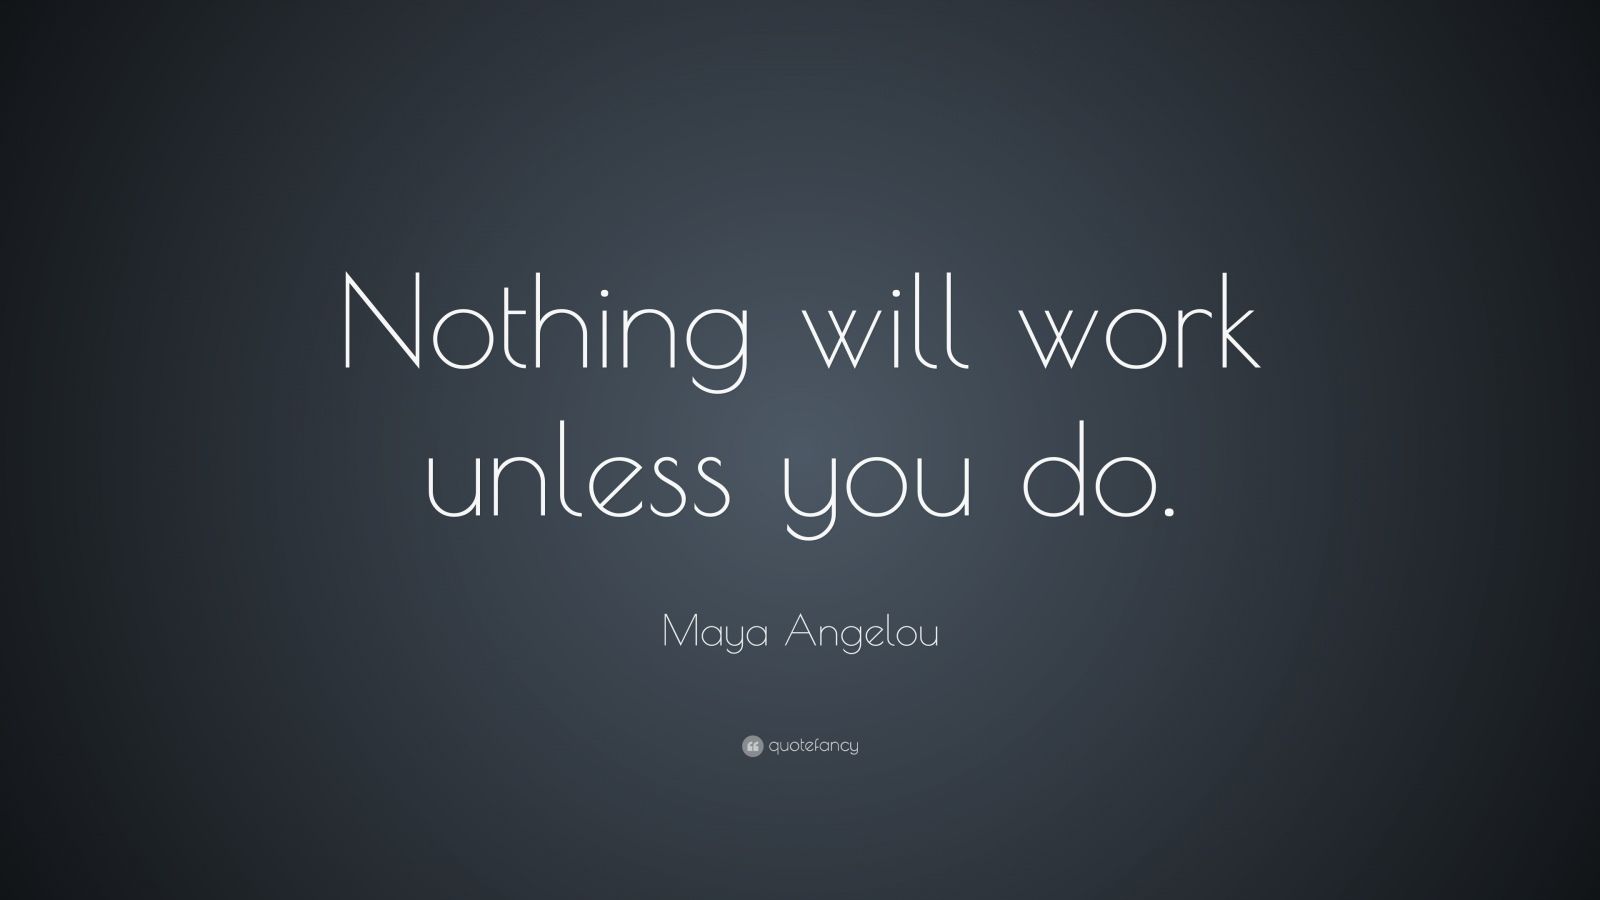 Maya Angelou Quotes (25 wallpapers) - Quotefancy